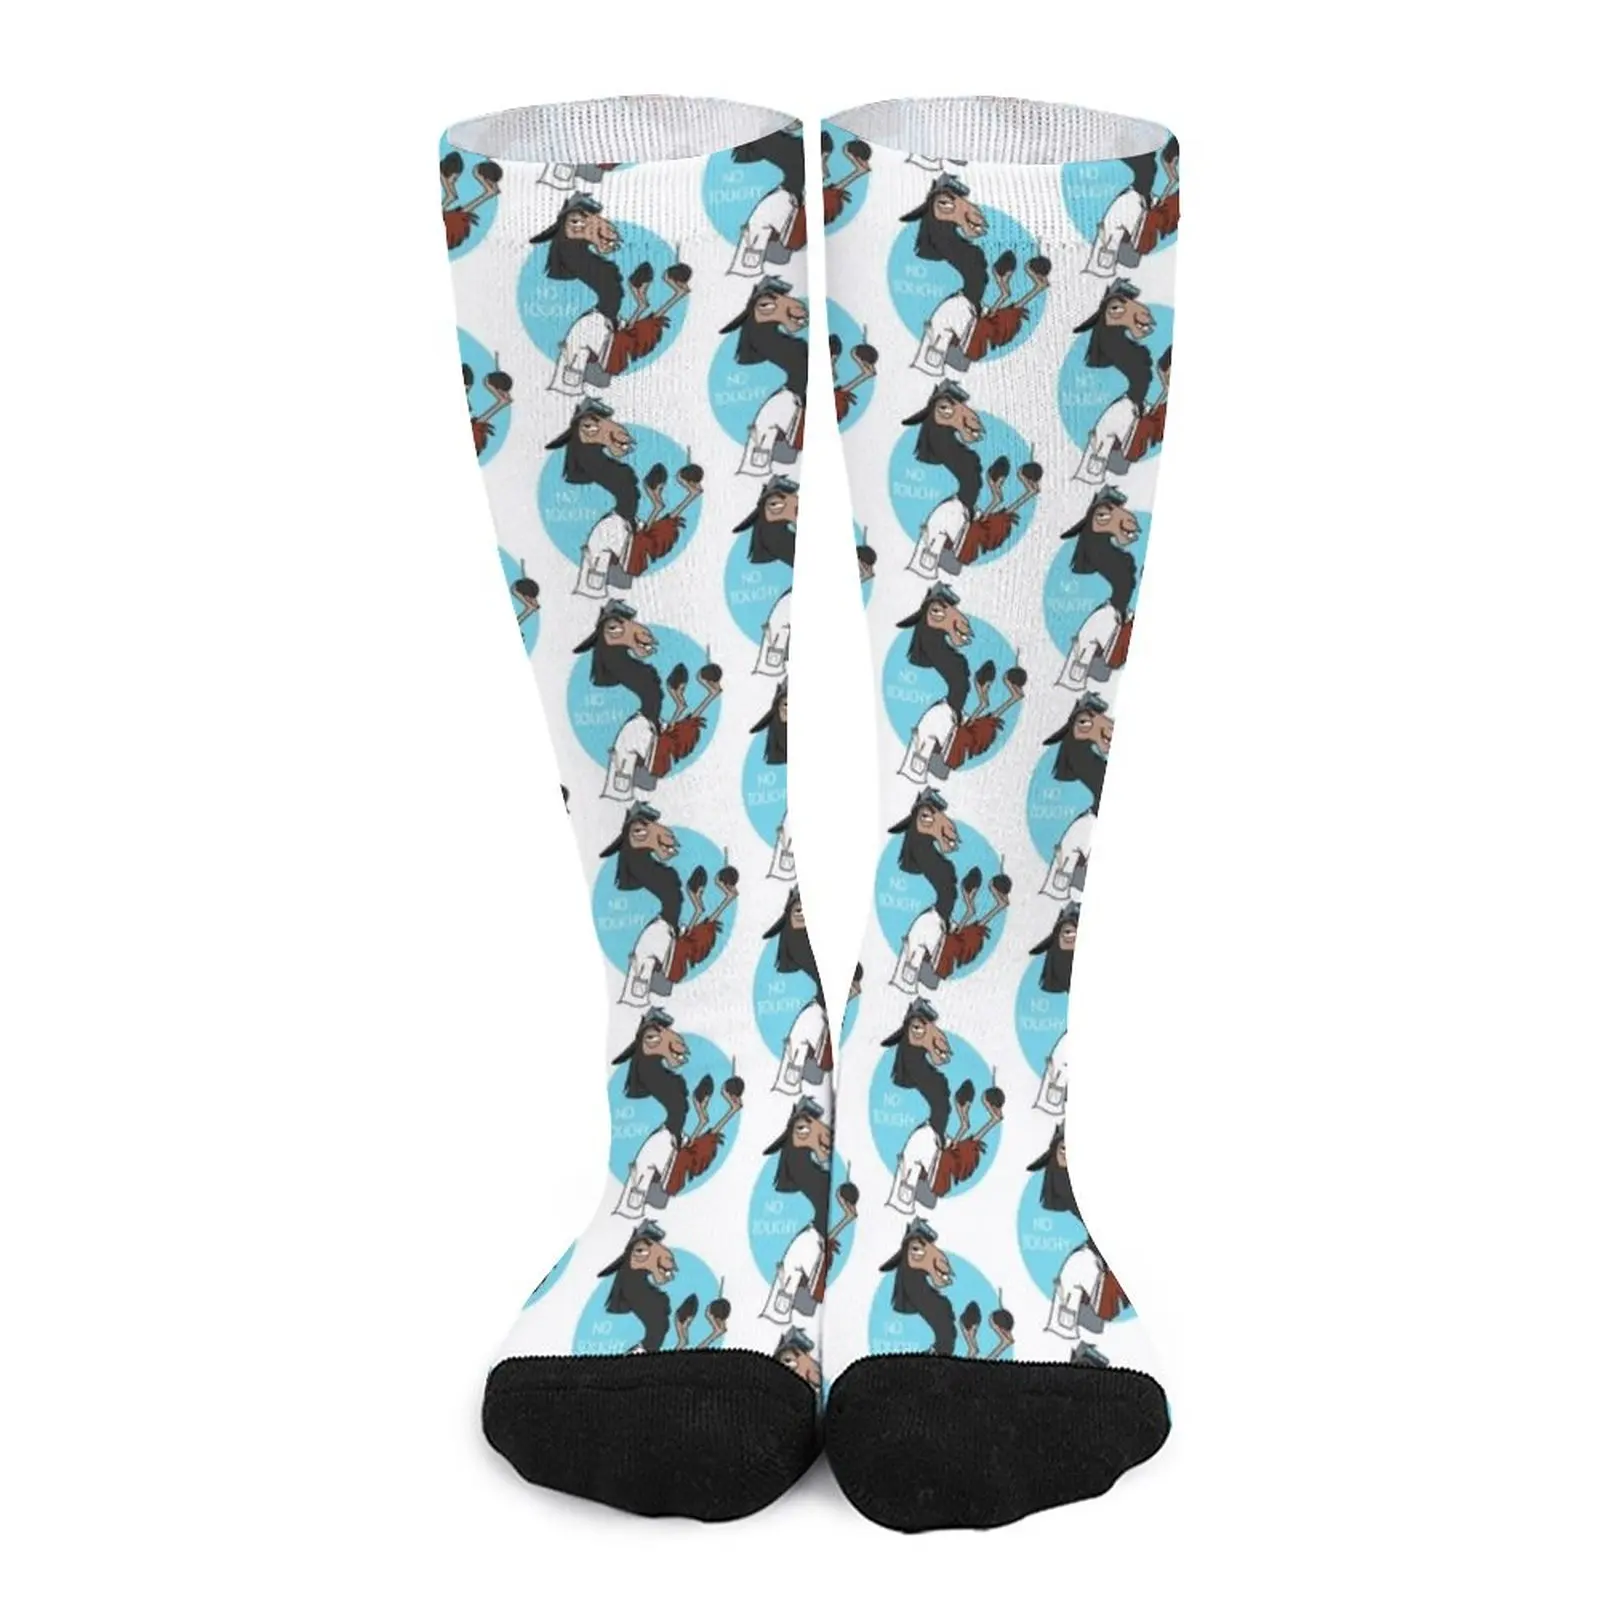 Kuzco Conservator - No Touchy Socks funny socks for men funny sock sports stockings man gym socks